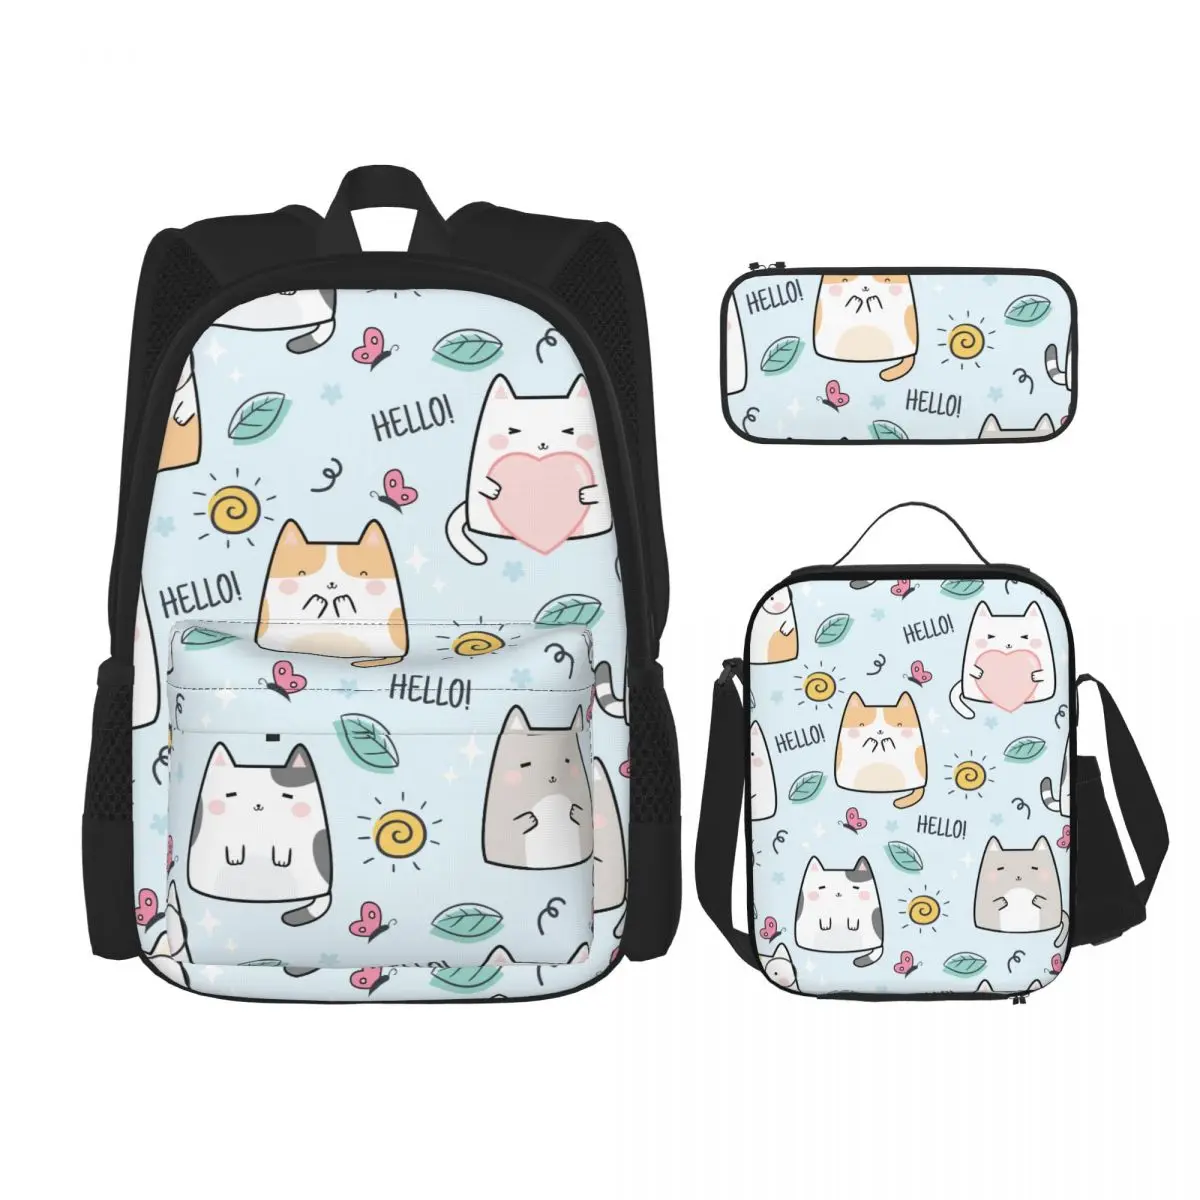 

Backpack 3 Pcs/set with Pencil Case Lunchbox Kids School Bags Boys Girls Teens Bagpacks